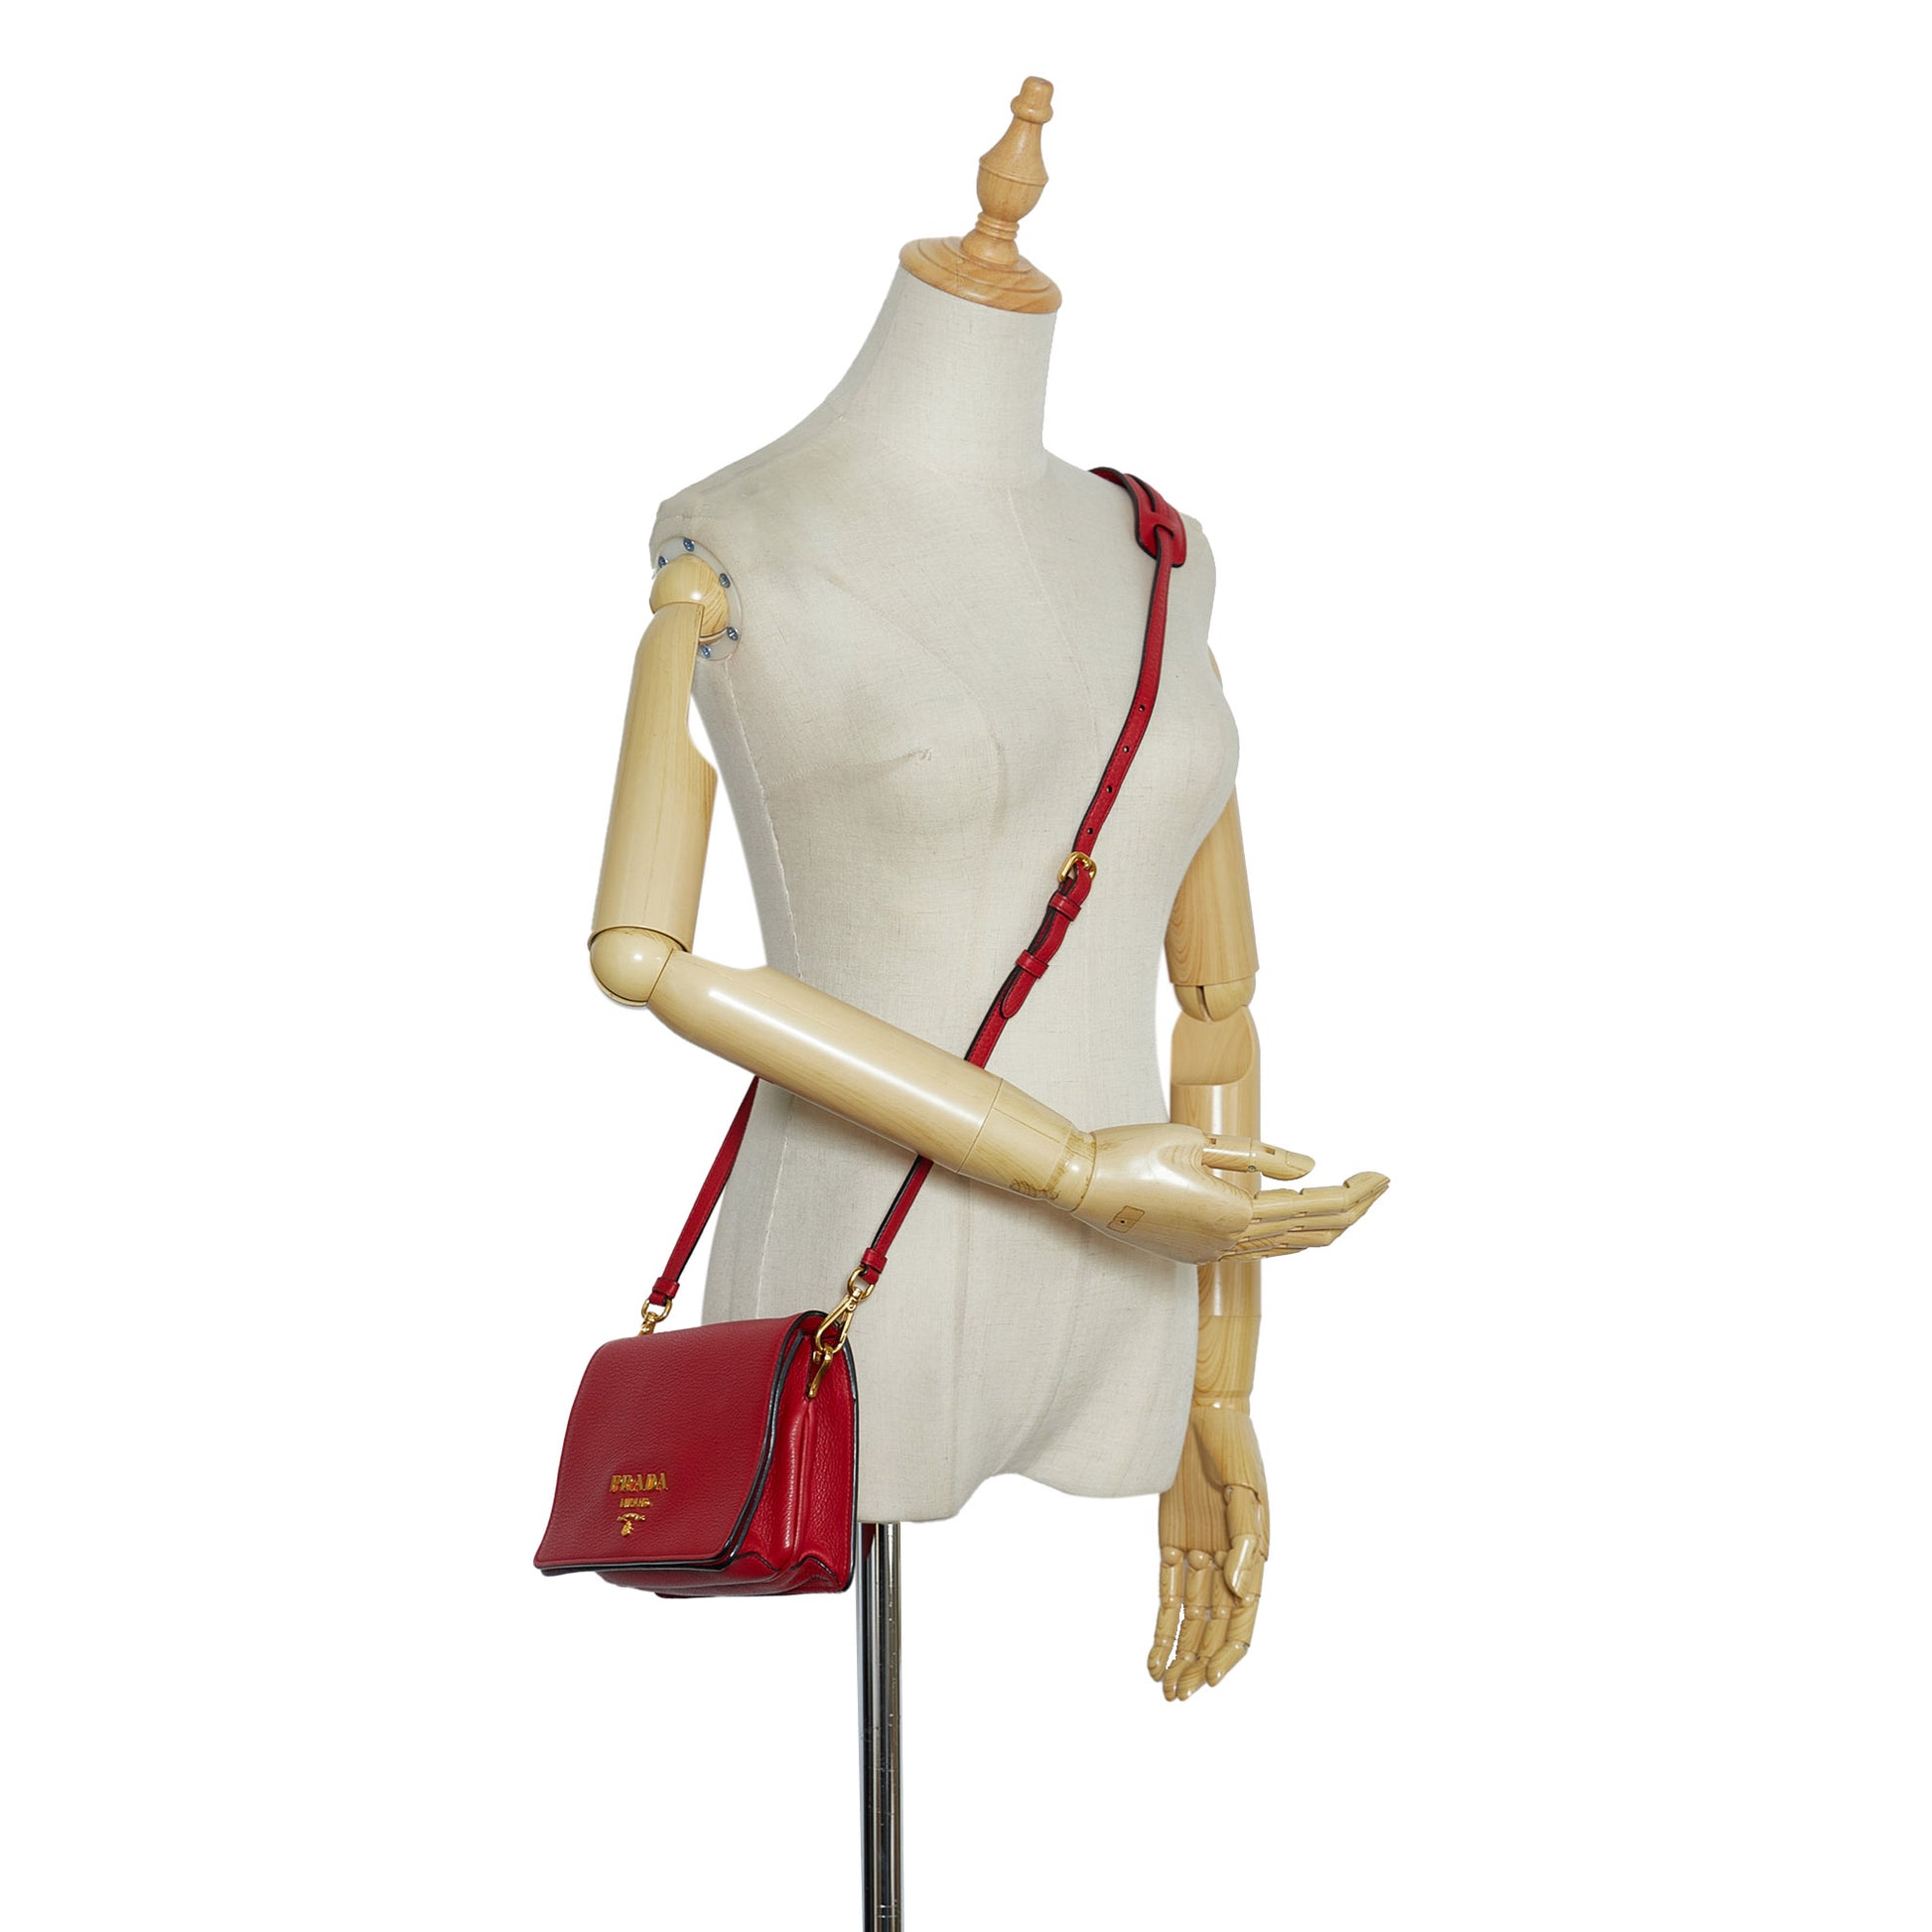 Prada Vitello Daino Small Flap Crossbody Bag, Prada Handbags